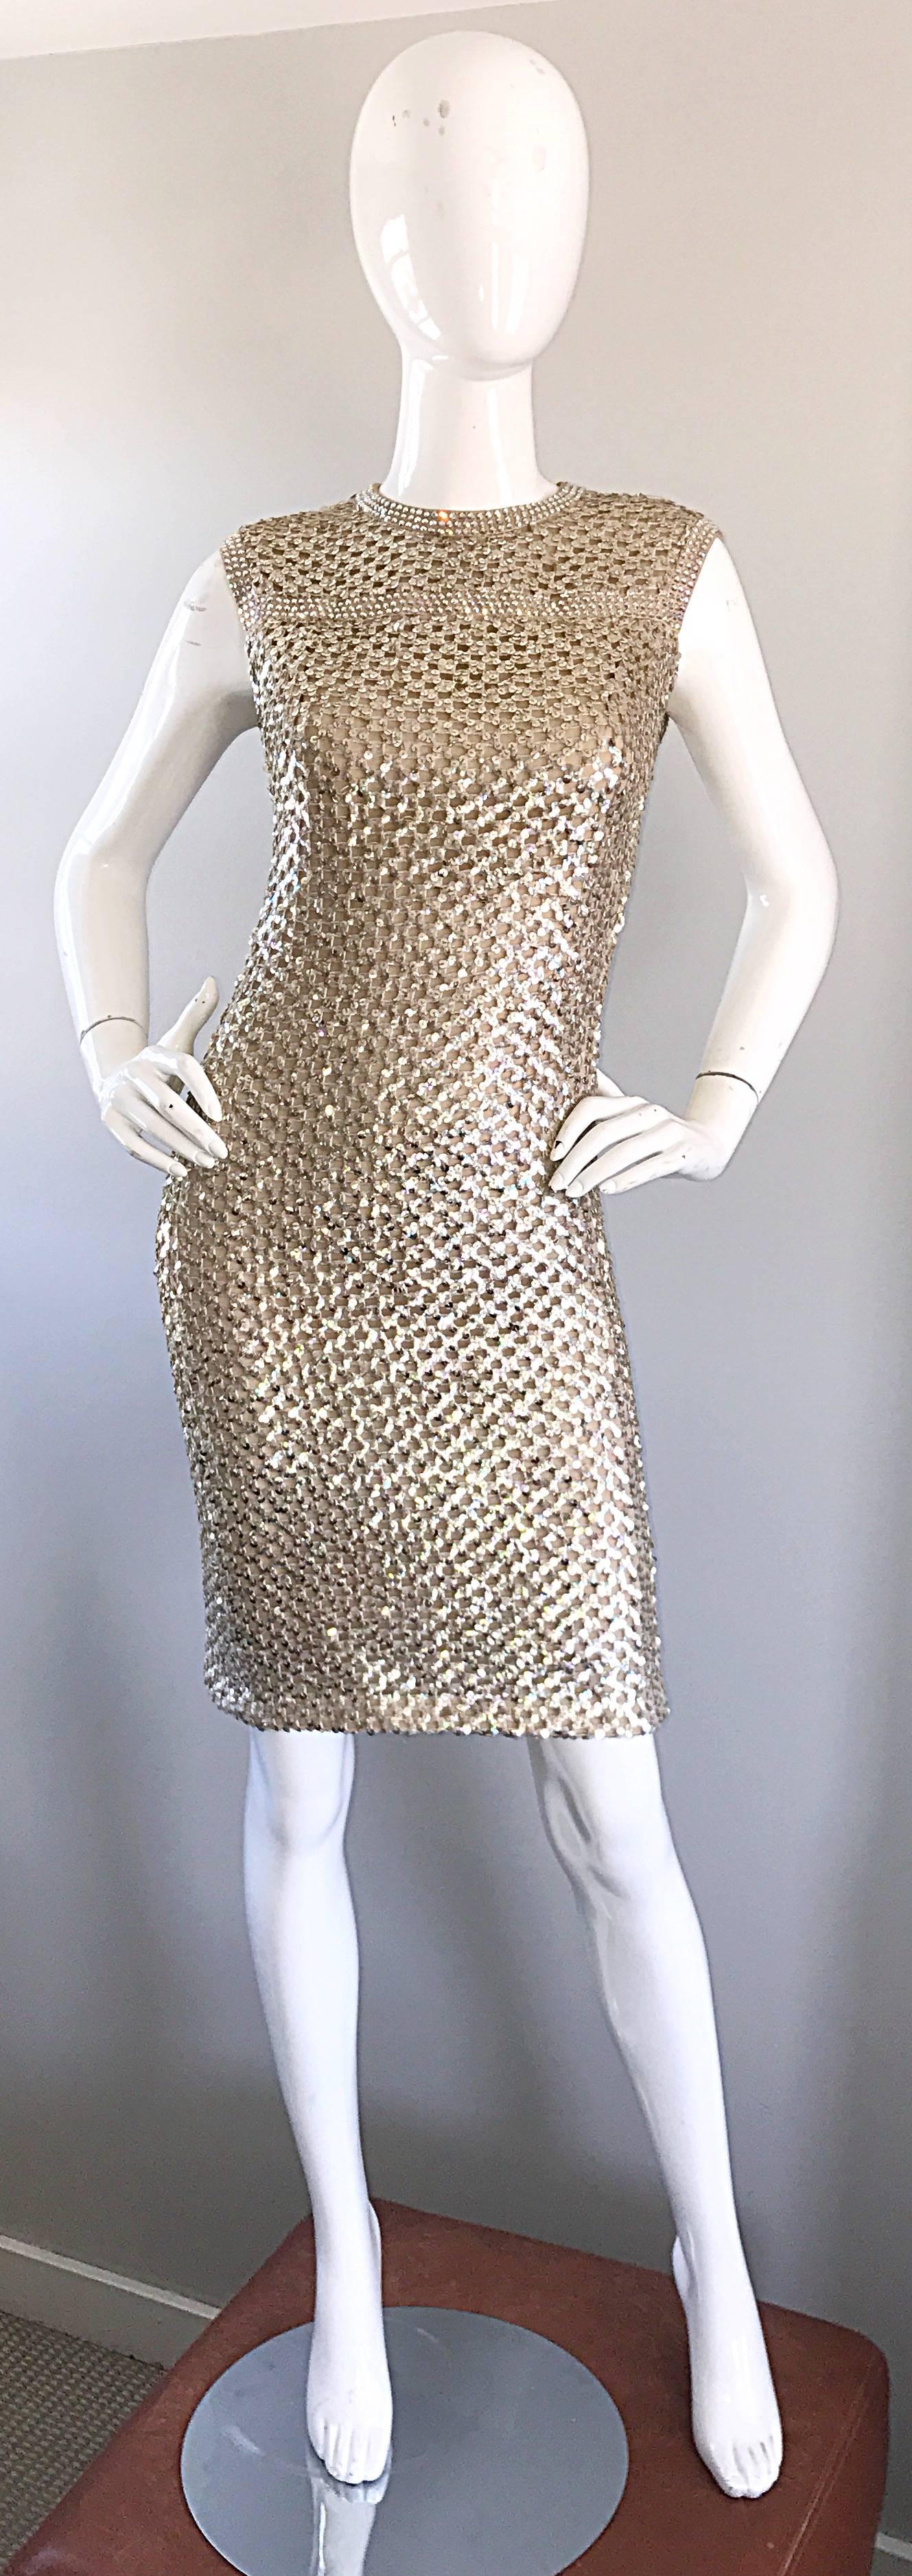 Documented 1960s Pat Sandler Lauren Hutton Gold Sequin Rhinestone Vintage Dress For Sale 1